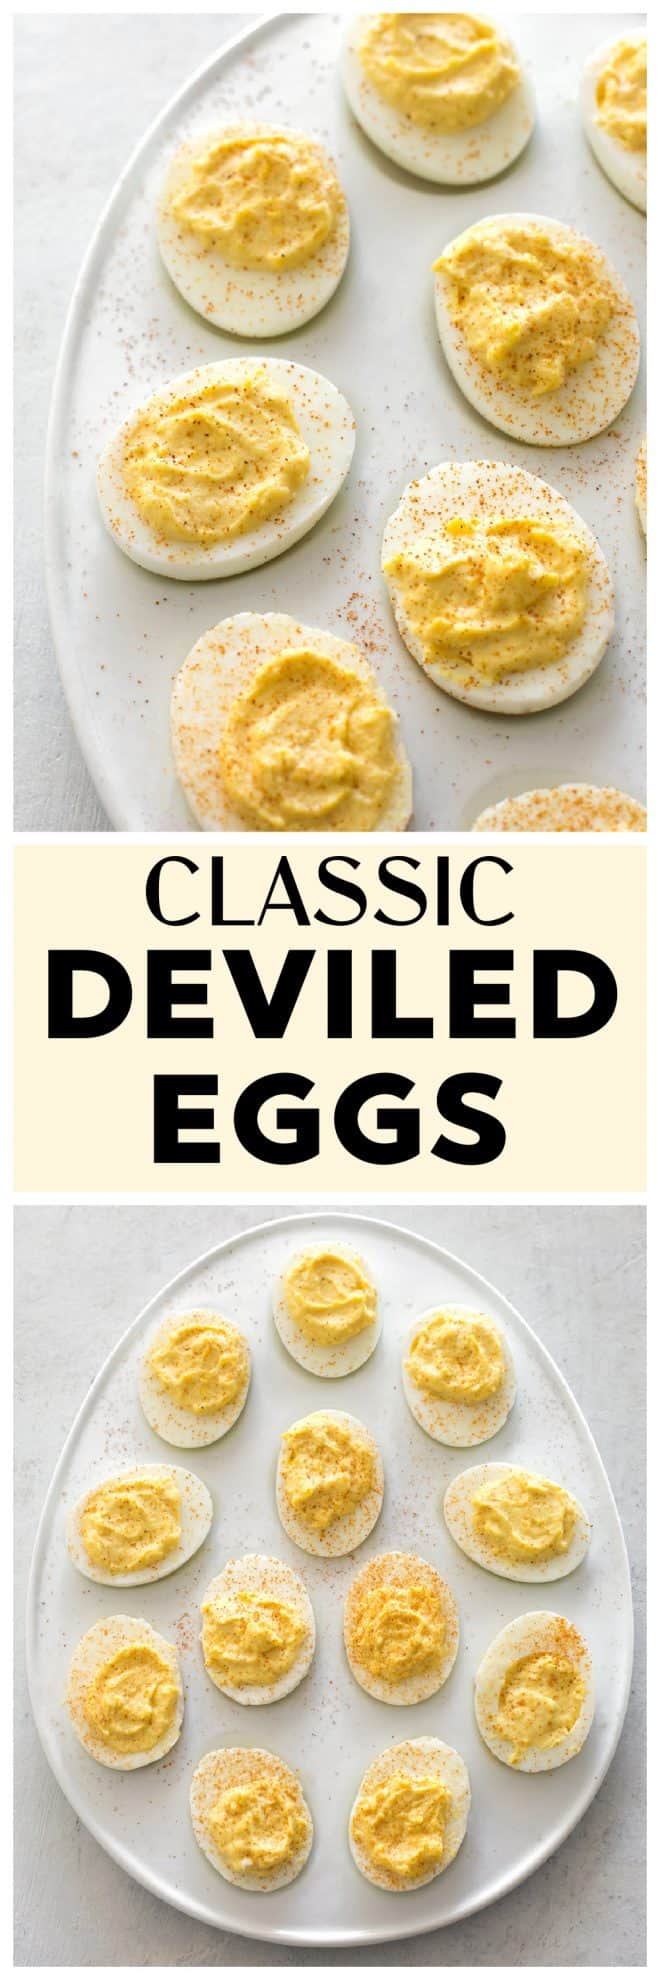 Deviled eggs - Deviled Eggs Recipe